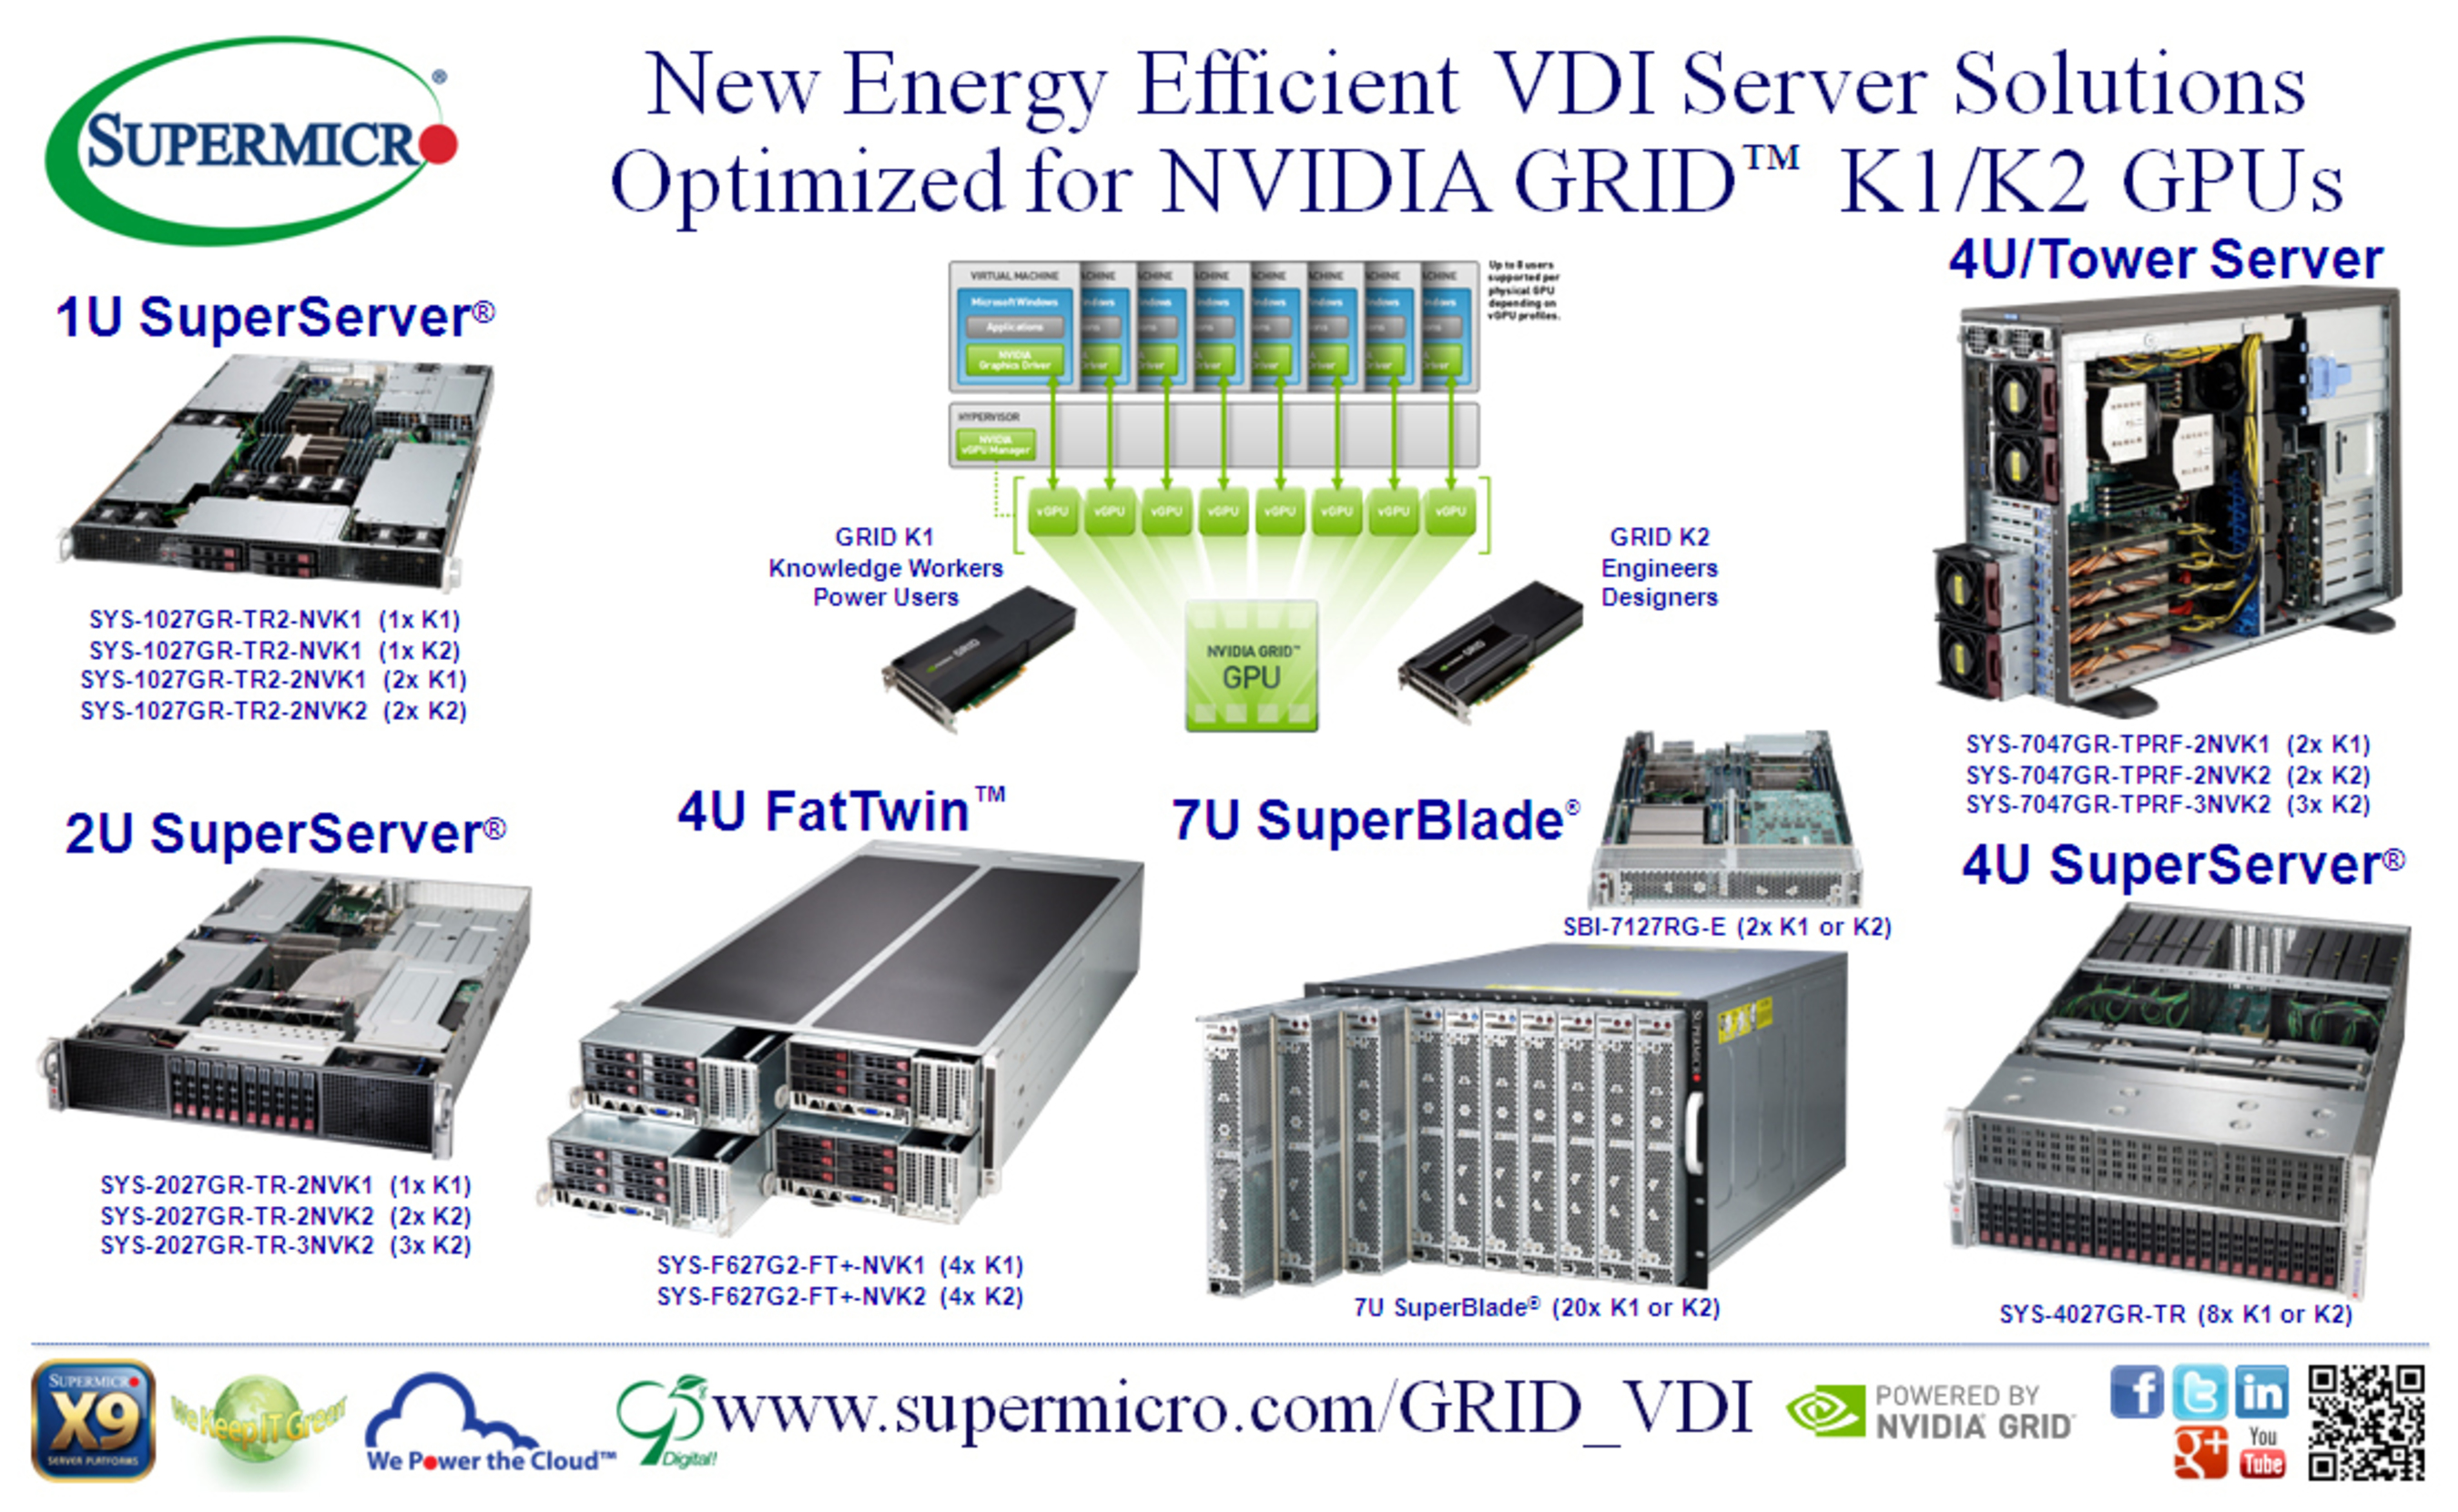 Supermicro (R) Energy-Efficient VDI Server Solutions Optimized for NVIDIA GRID (TM). (PRNewsFoto/Super Micro Computer, Inc.) (PRNewsFoto/SUPER MICRO COMPUTER, INC.)